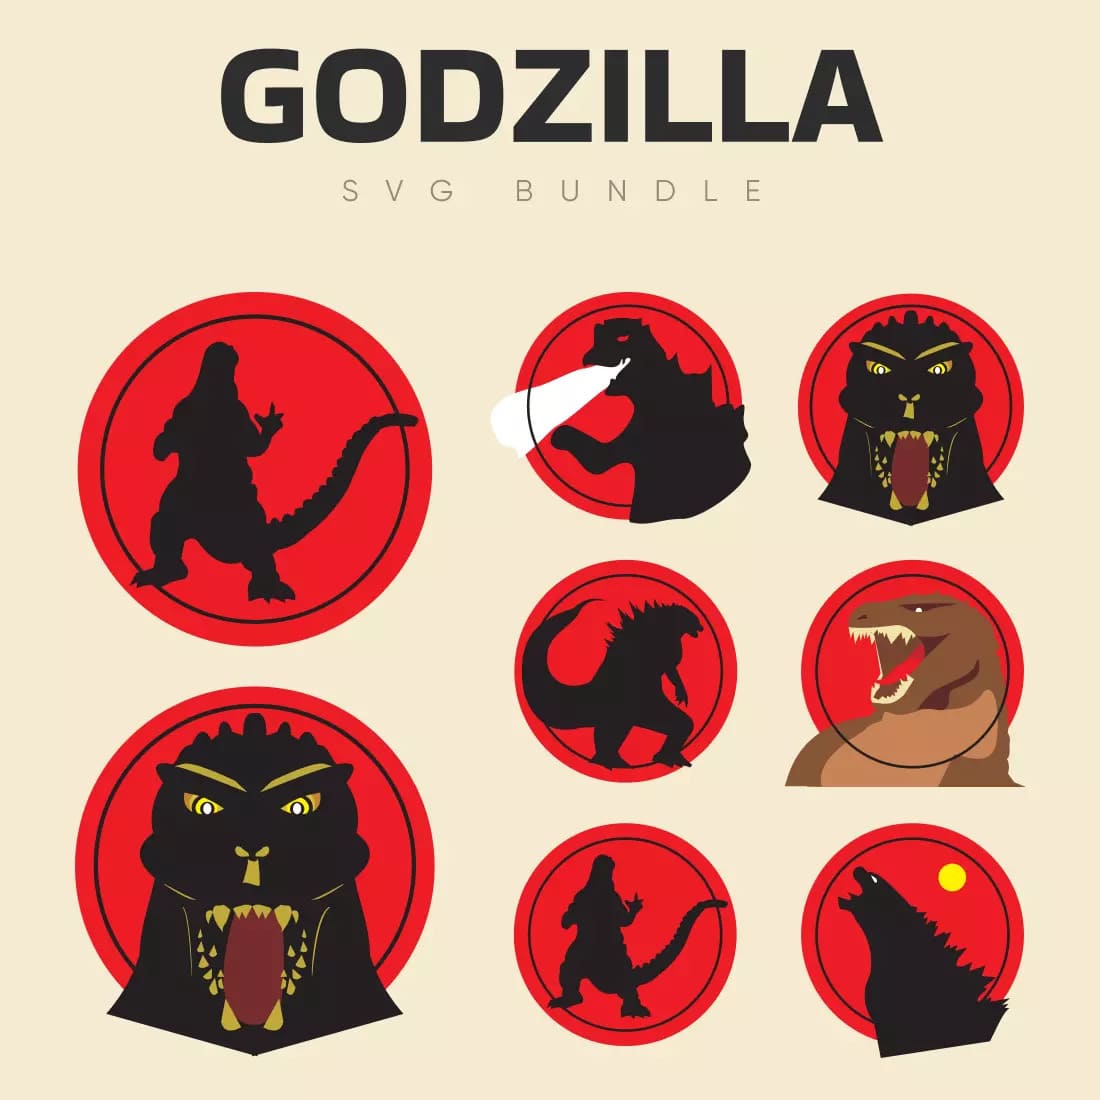 Godzilla svg bundle includes godzillas.